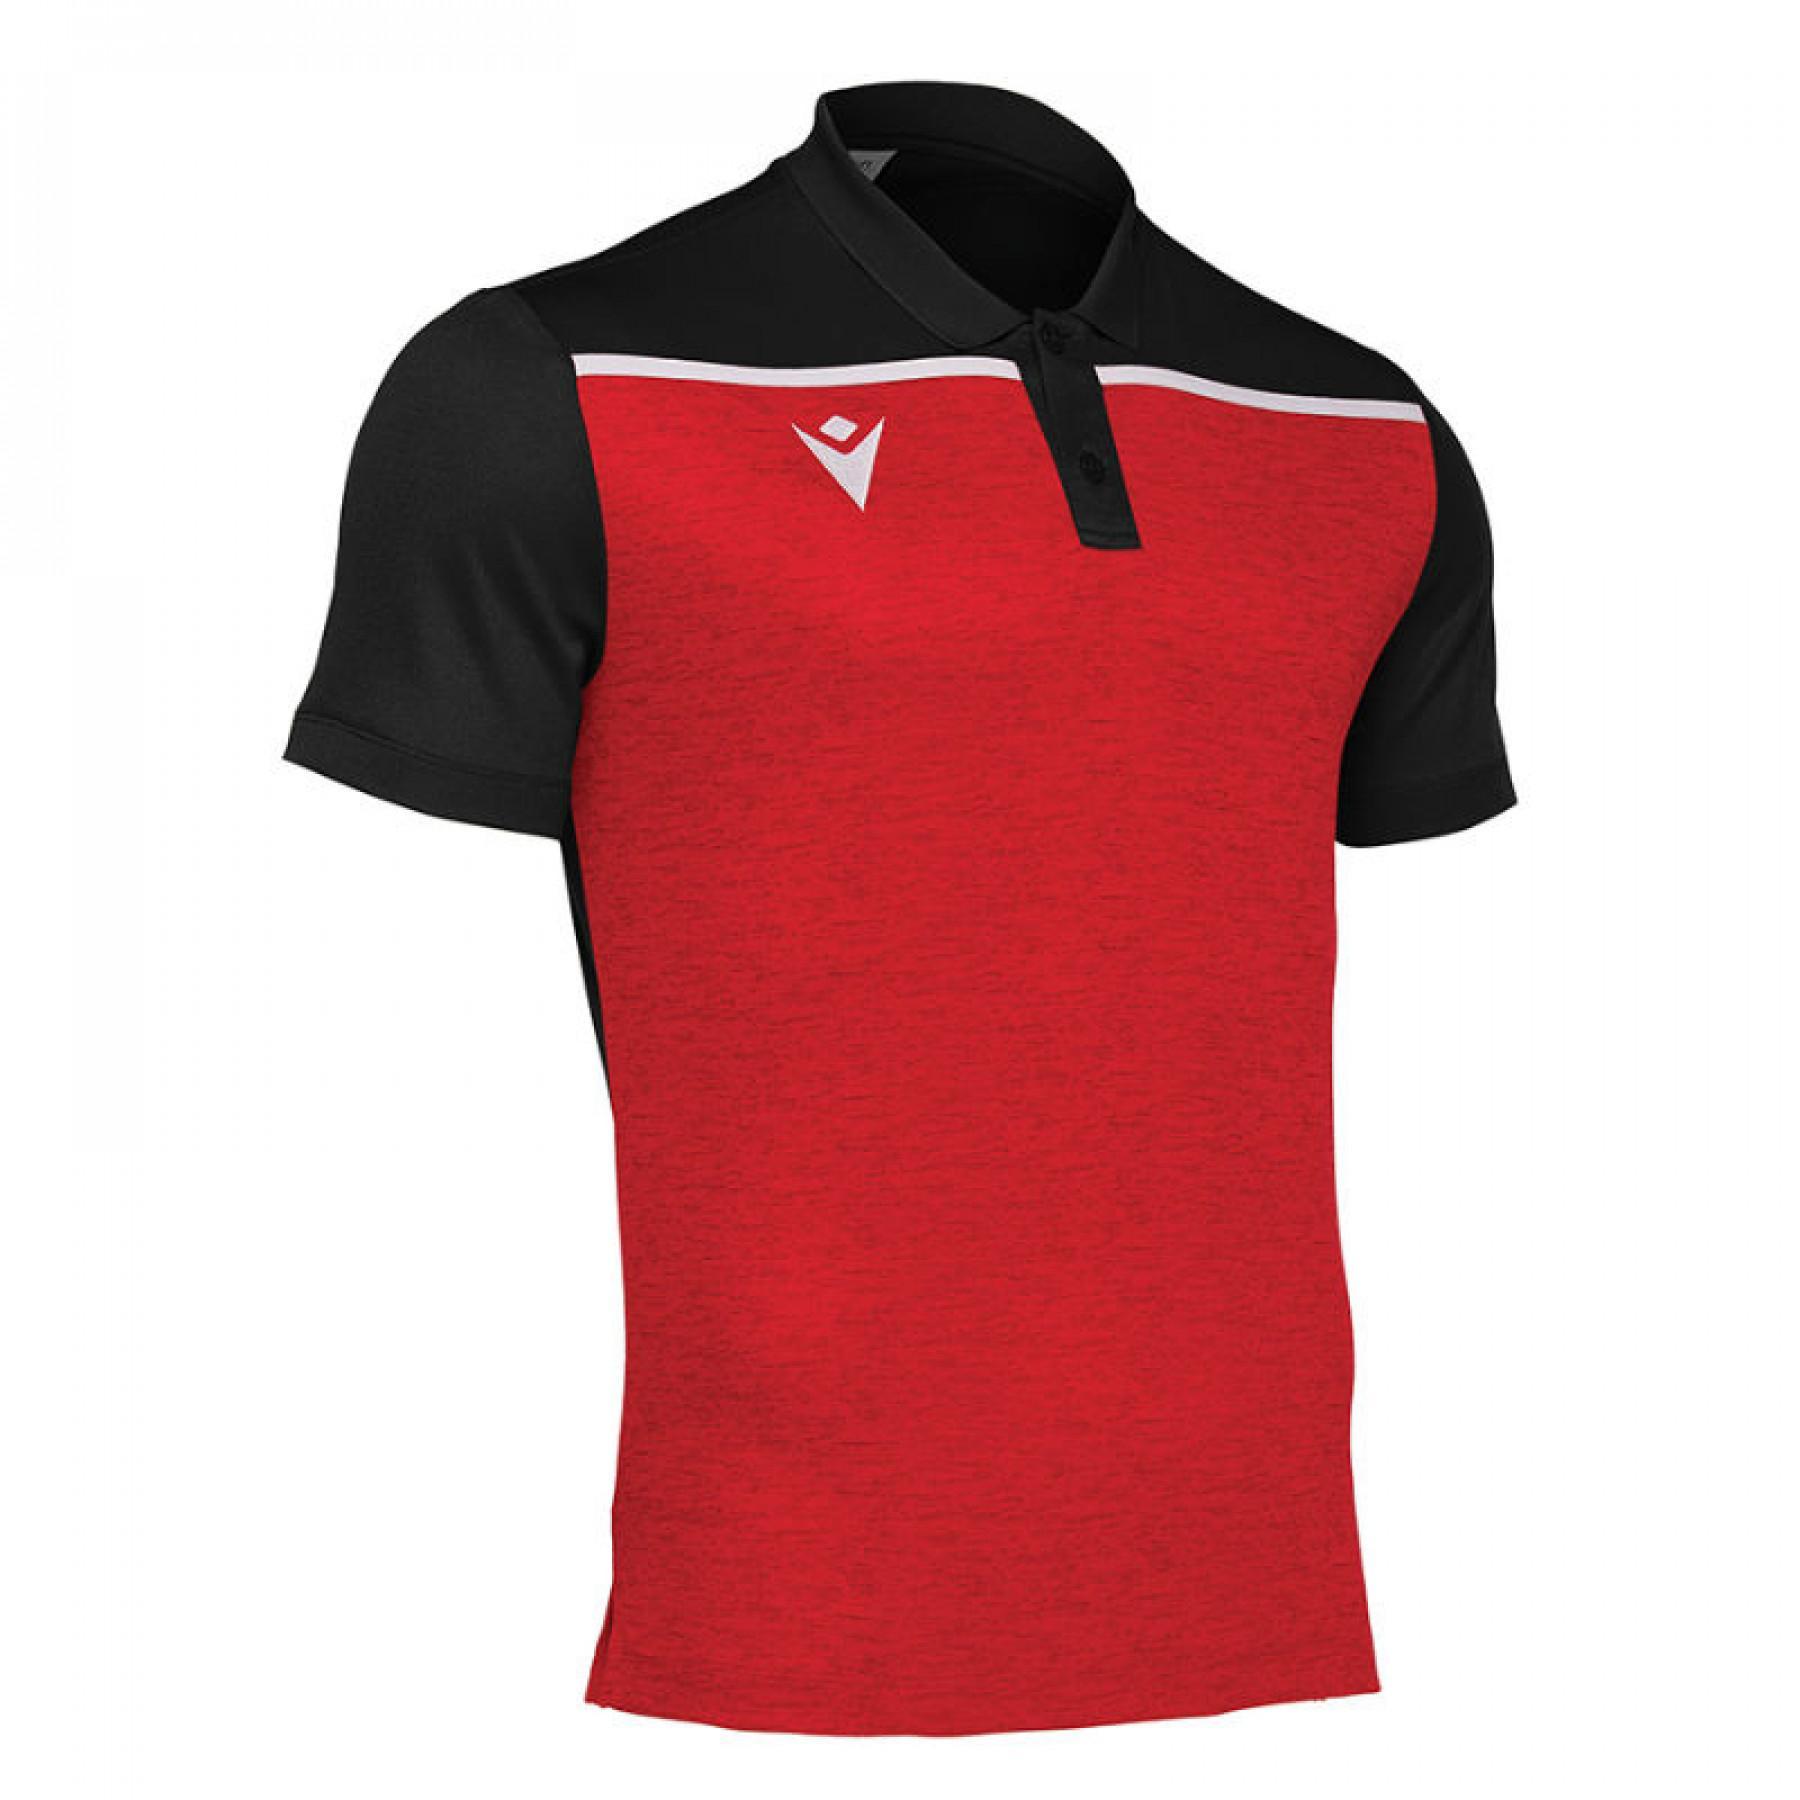 Polo Macron jumeirah - T-shirts & polo shirts - Men's wear - Handball wear